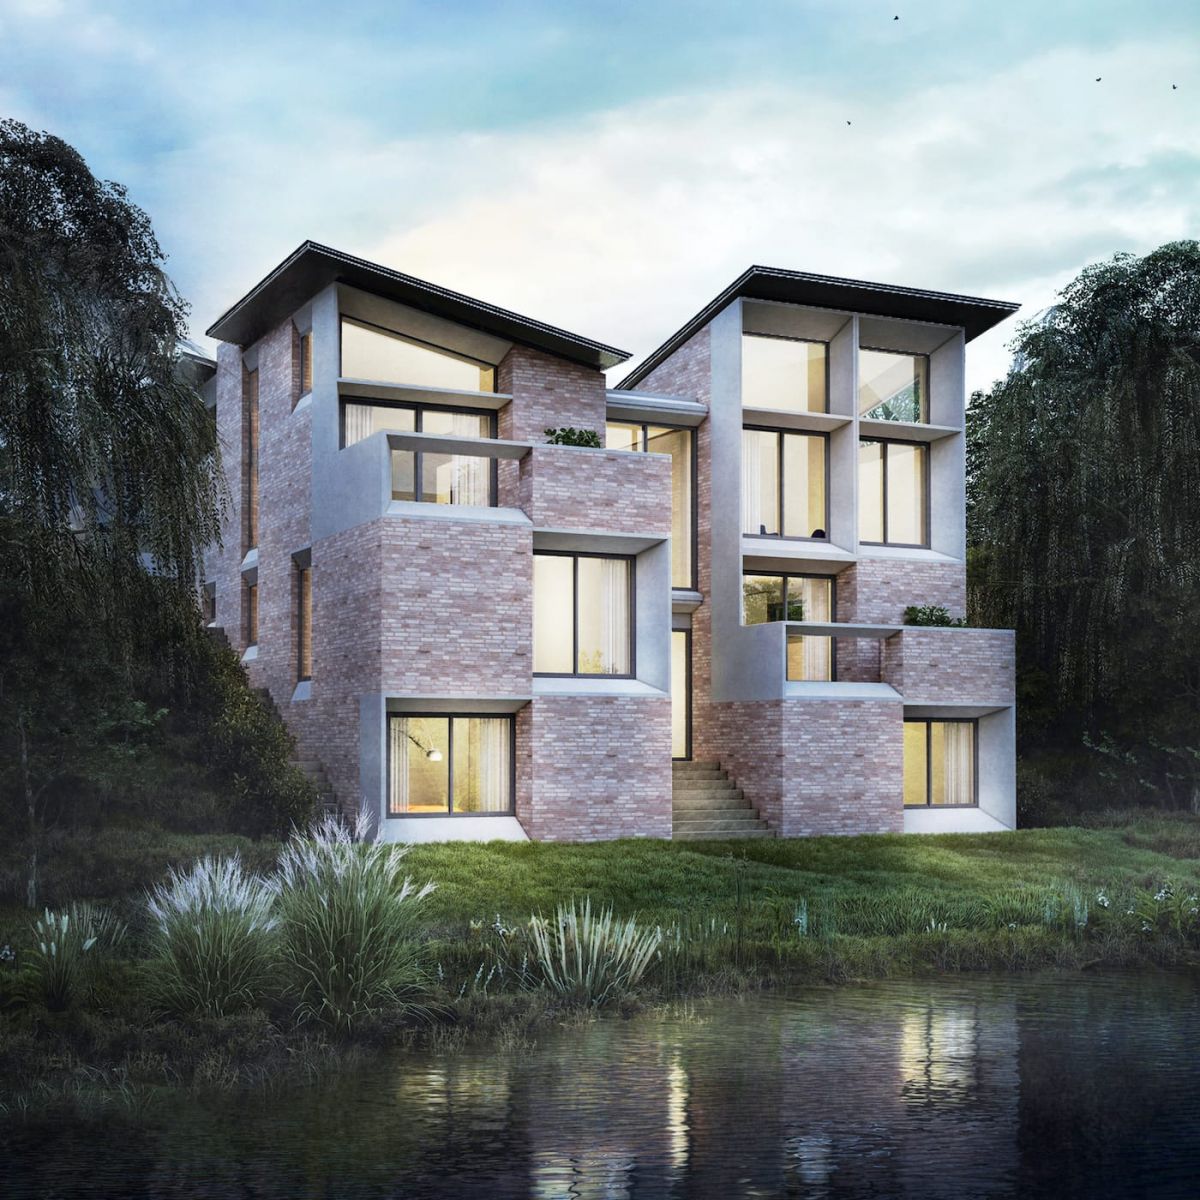 Villa Birra Project - Adrian James Architects, Oxford